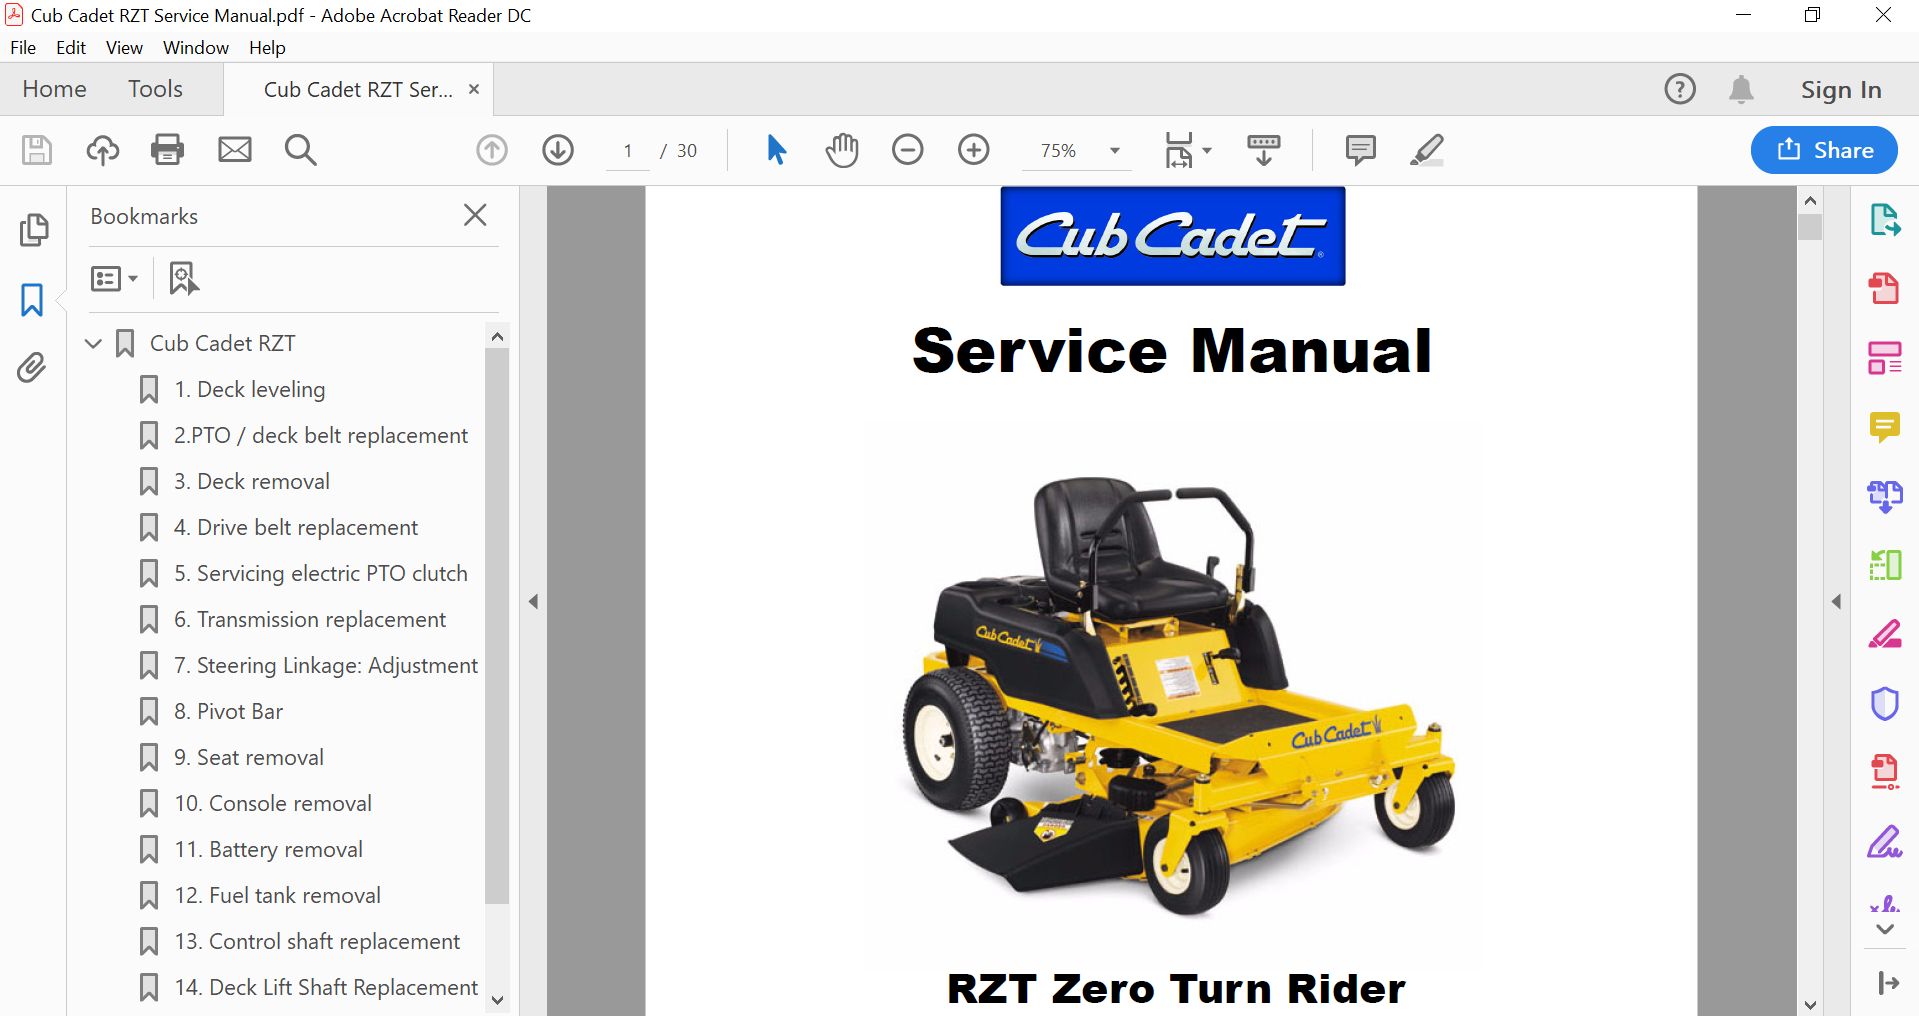 Cub Cadet RZT Zero Turn Rider Service Manual Download